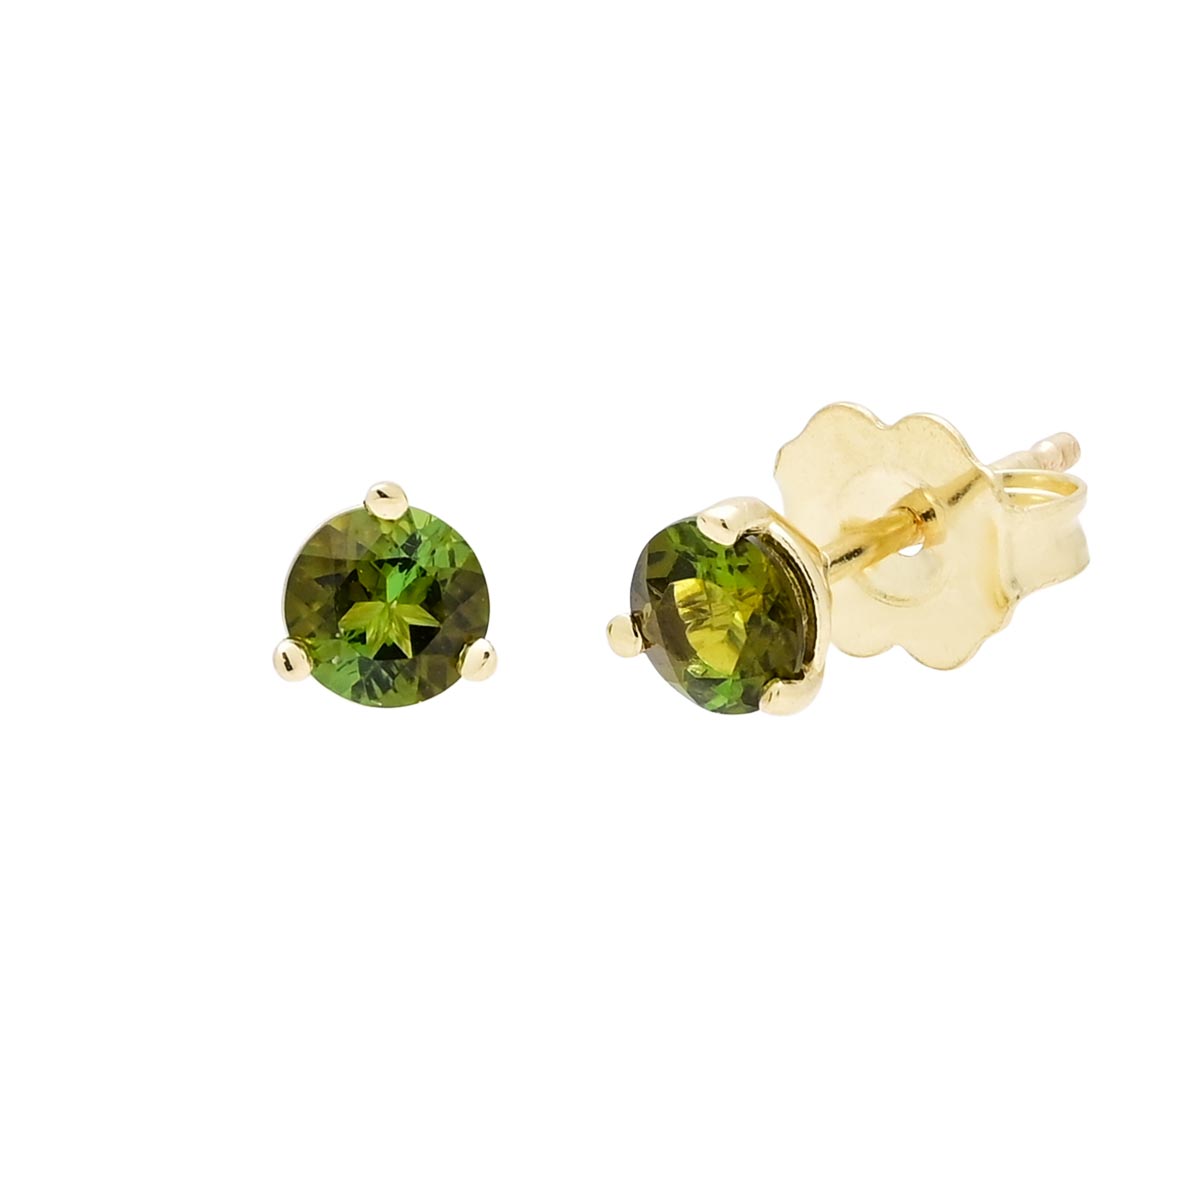 Maine Green Tourmaline Stud Earrings in 14kt Yellow Gold (4mm)